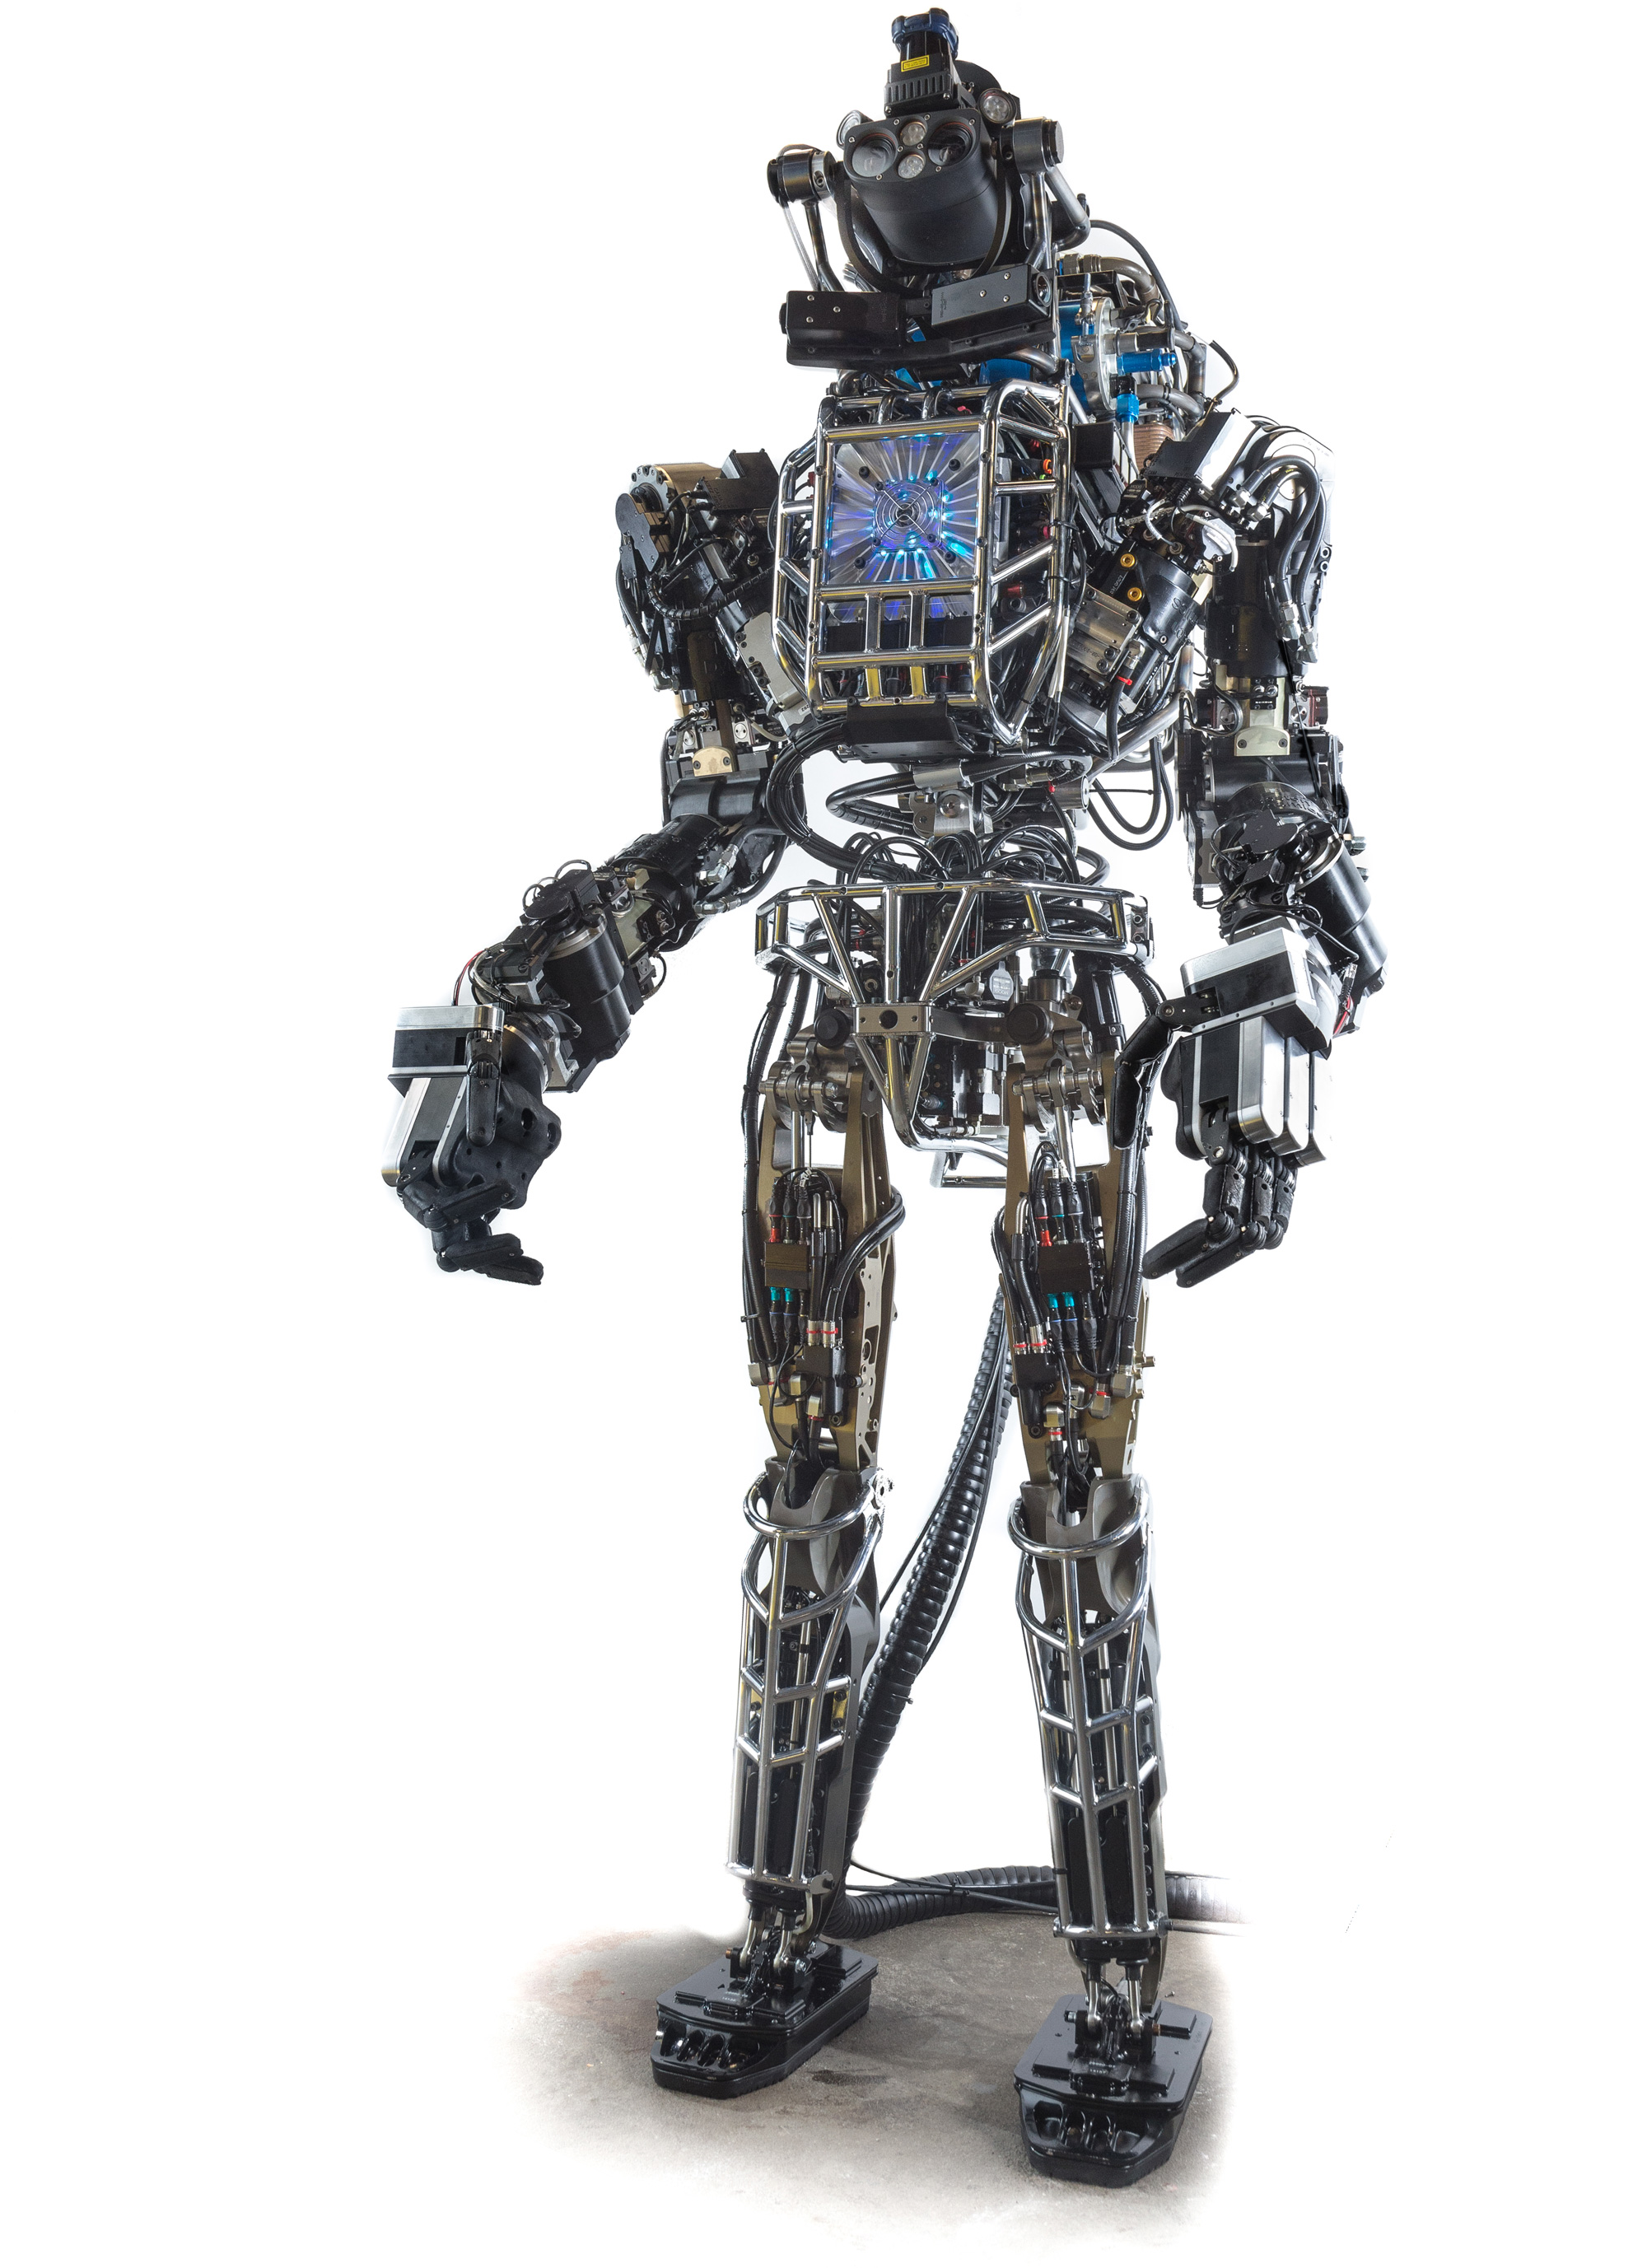 Killer Robots? DARPA Unveils ATLAS